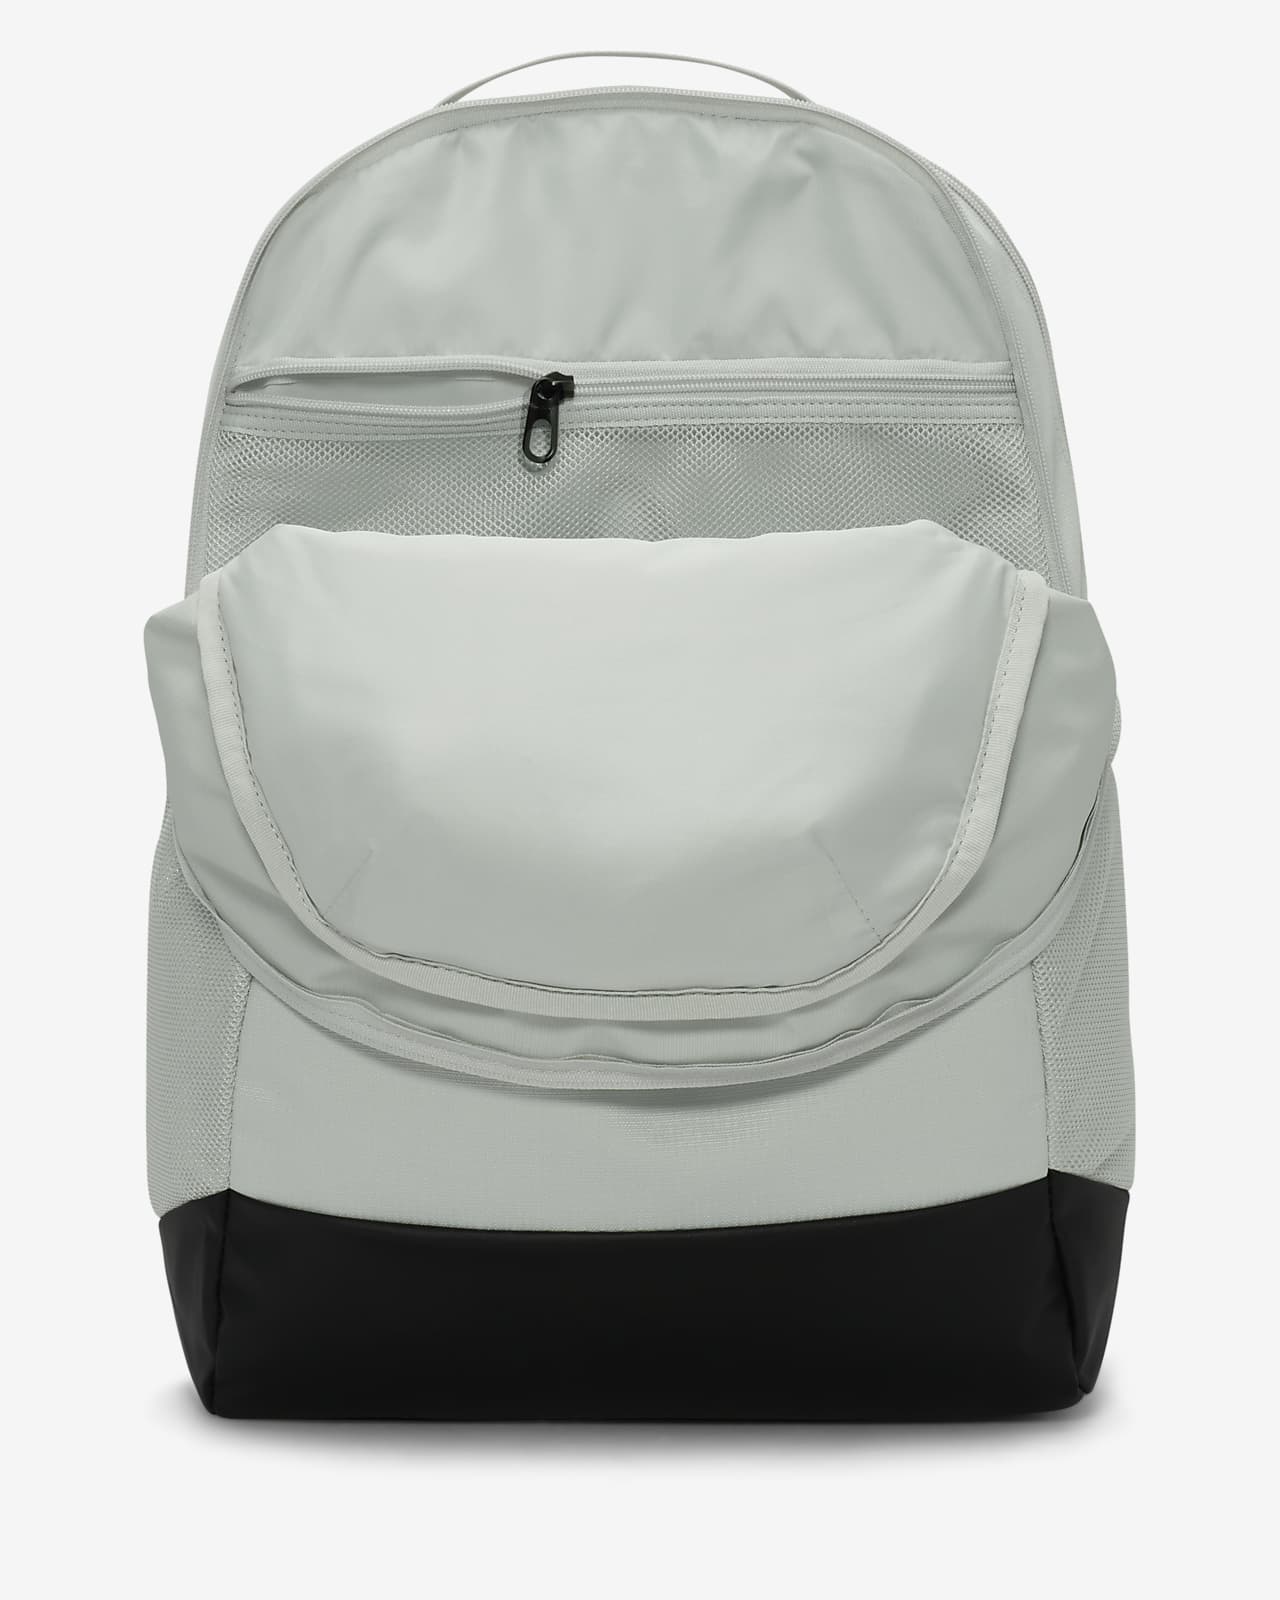 Nike Brasilia 9.5 Backpack Black / White